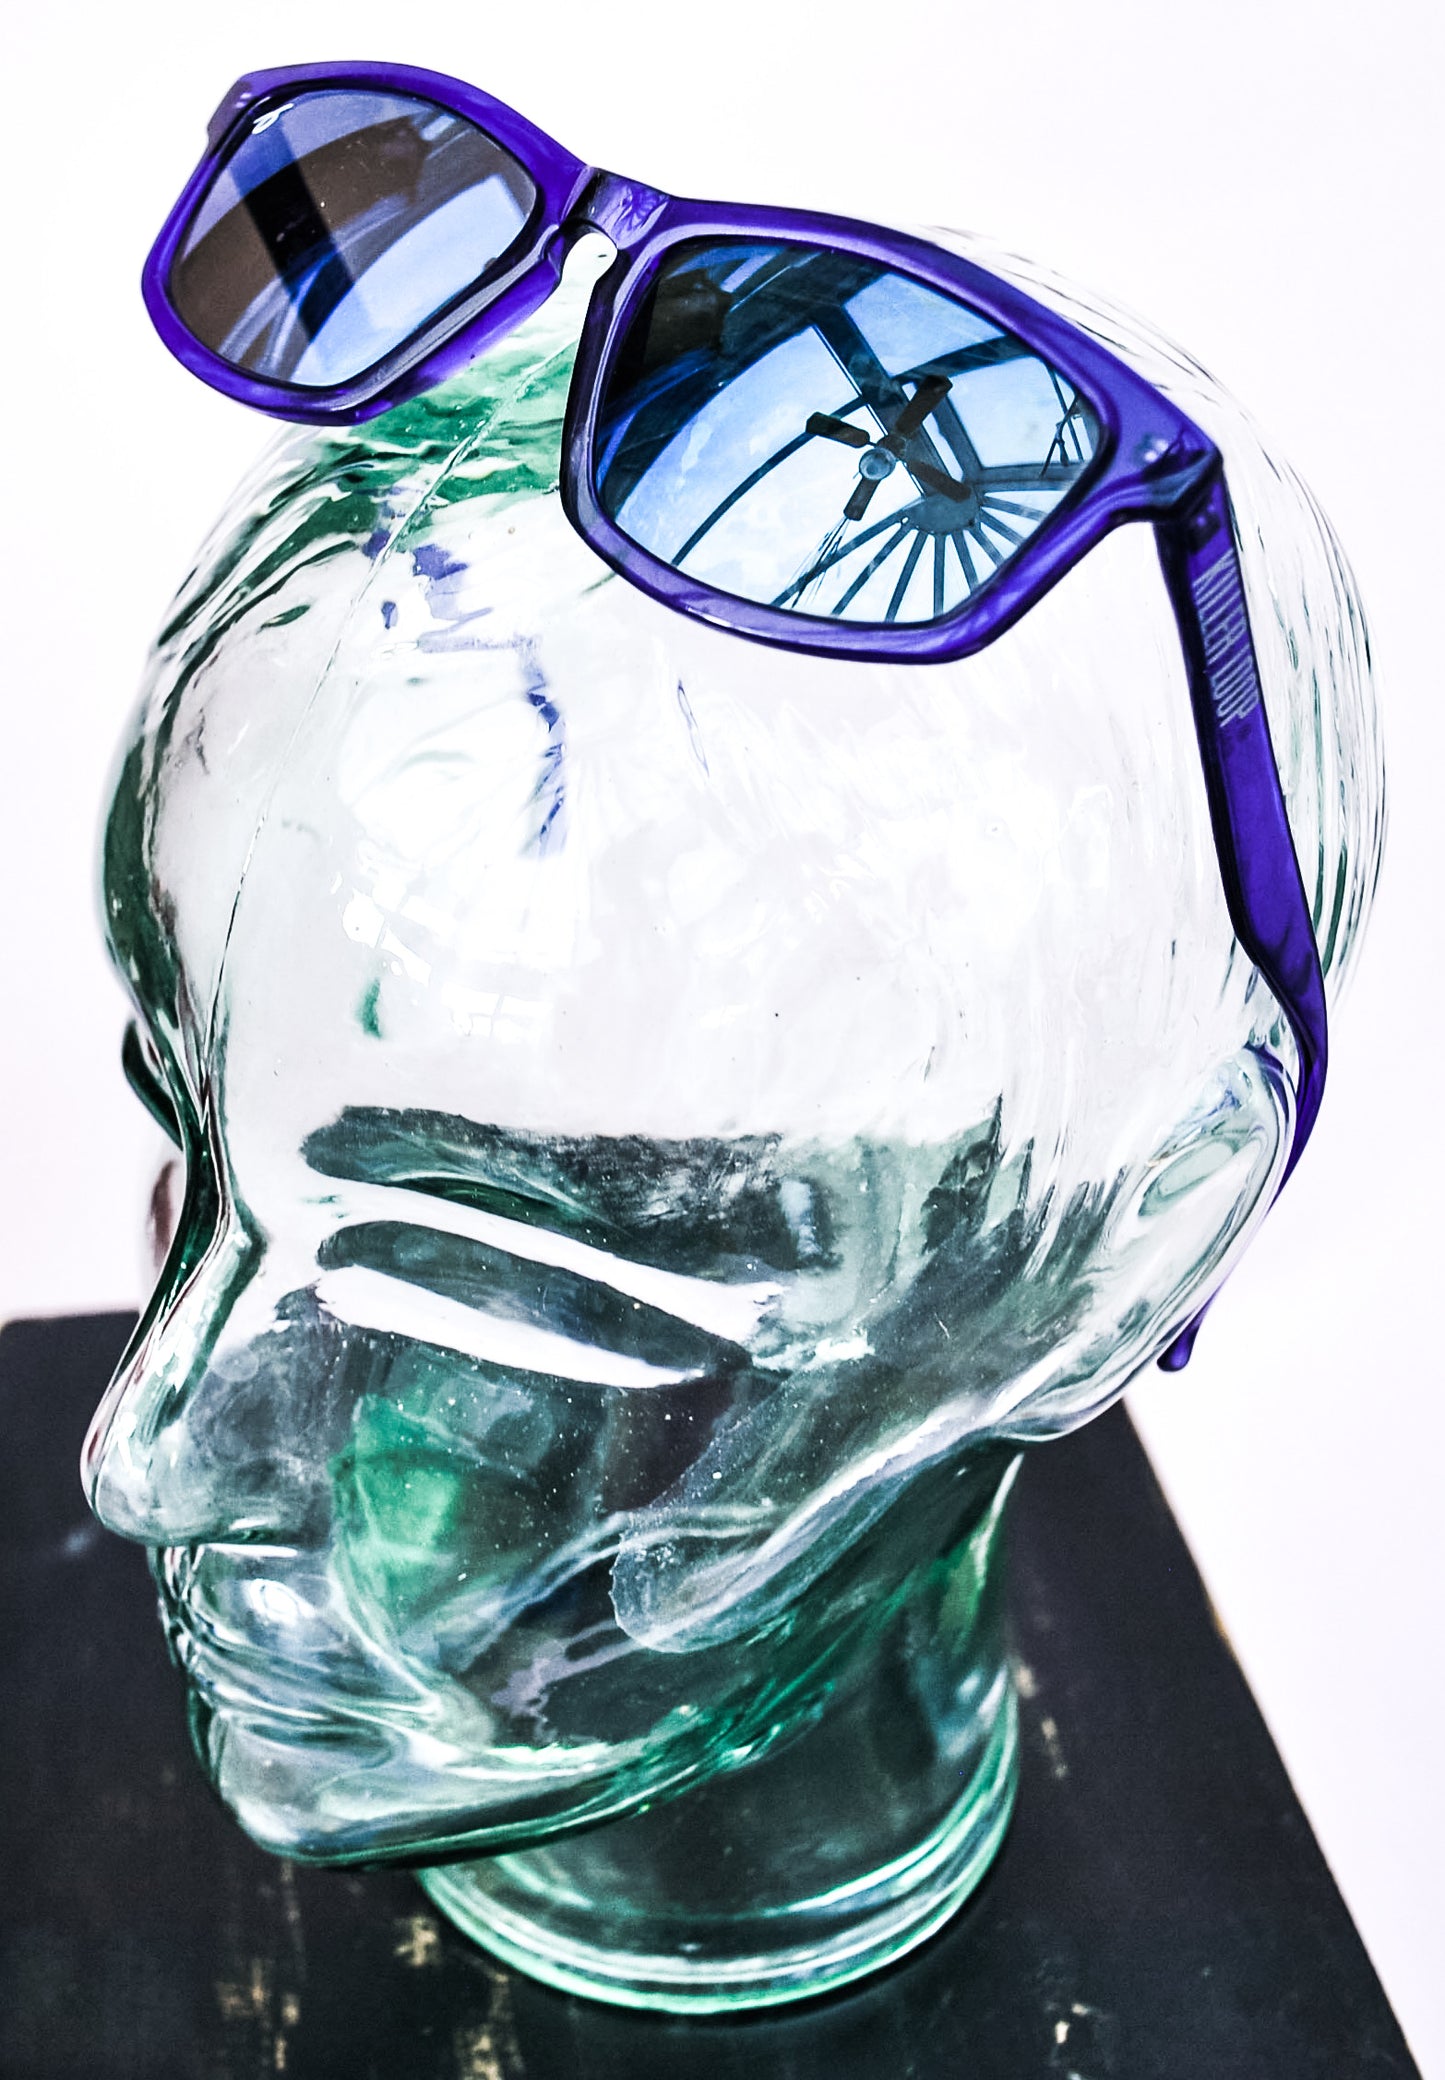 1990s Rare Killer Loop Wayfarer Mirrored Sunglasses in Violet Blue